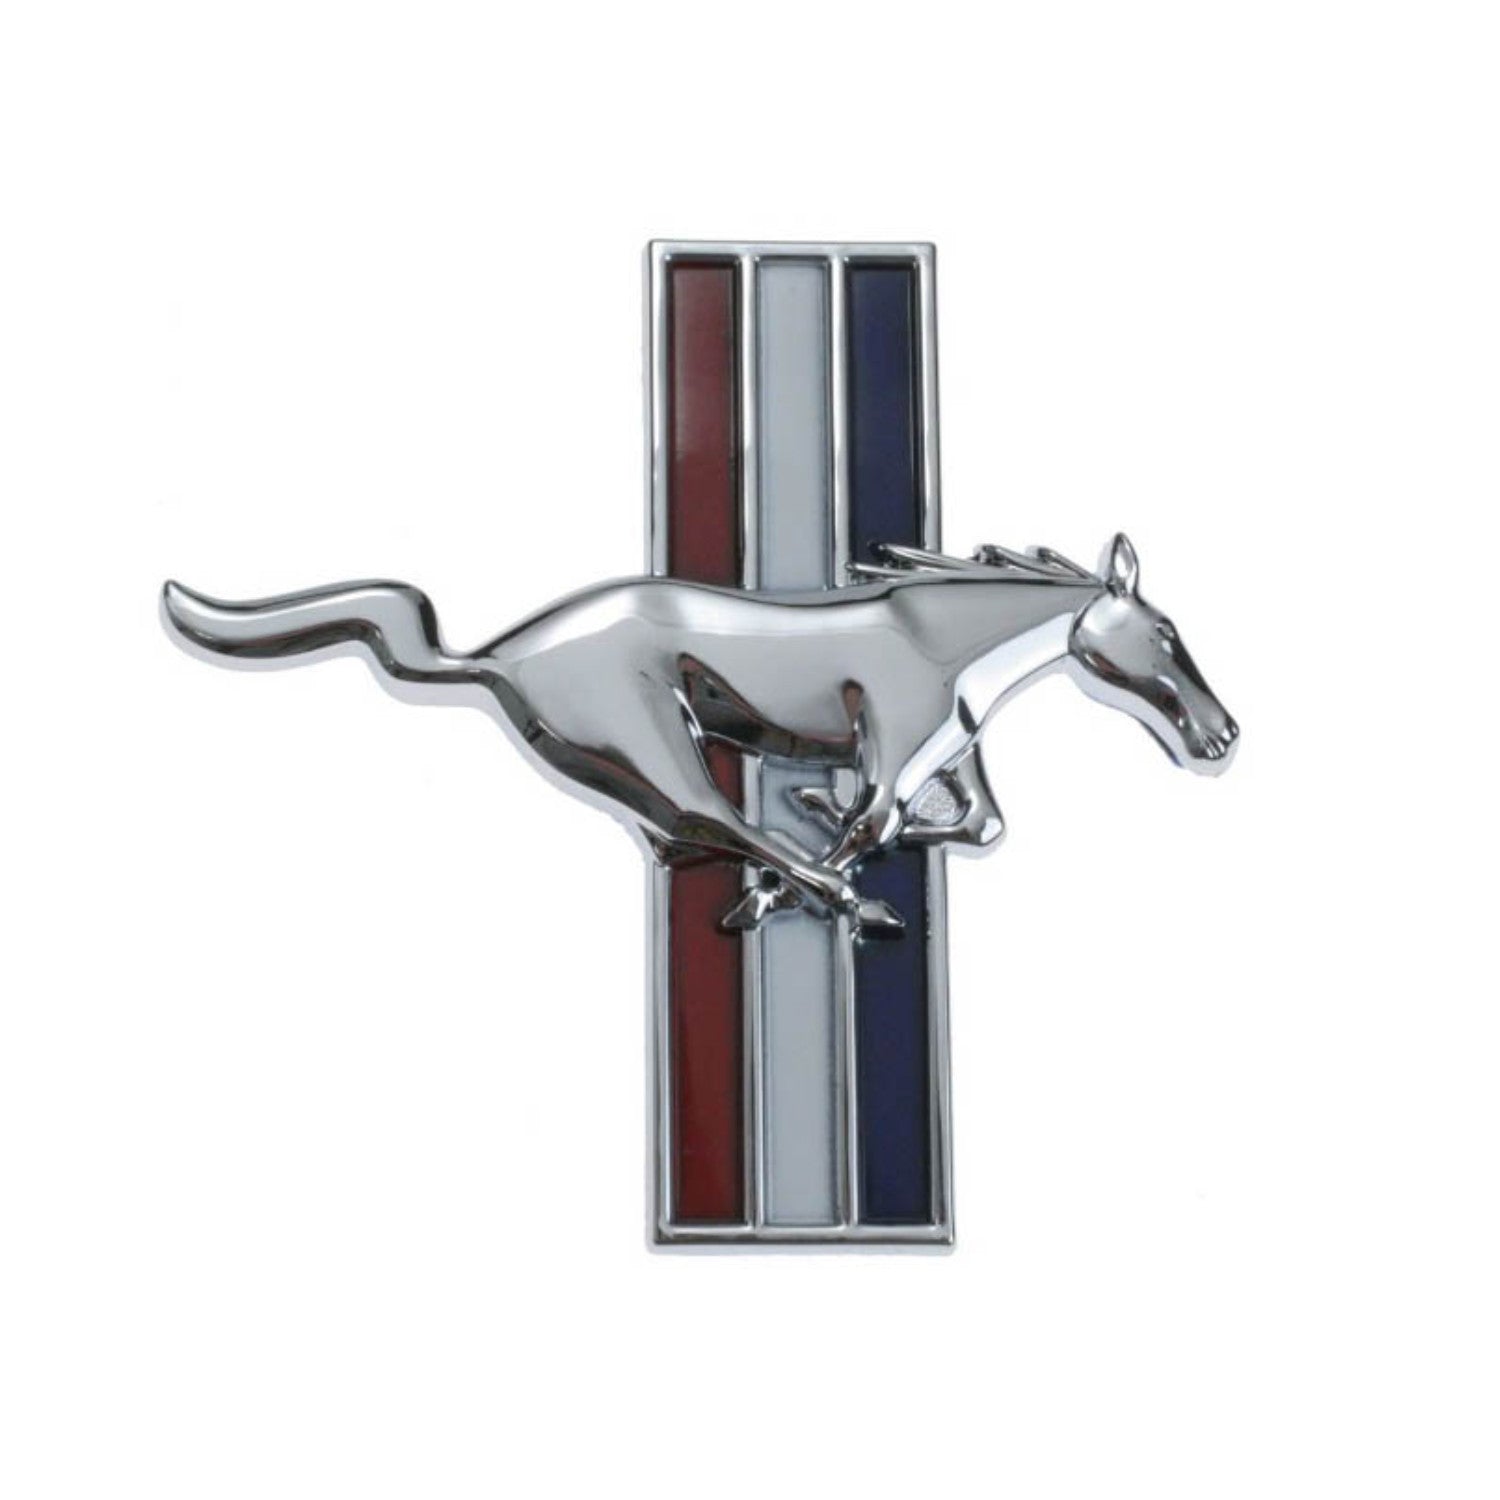 Ford Tribar Pony Running Horse Badge Emblem RH